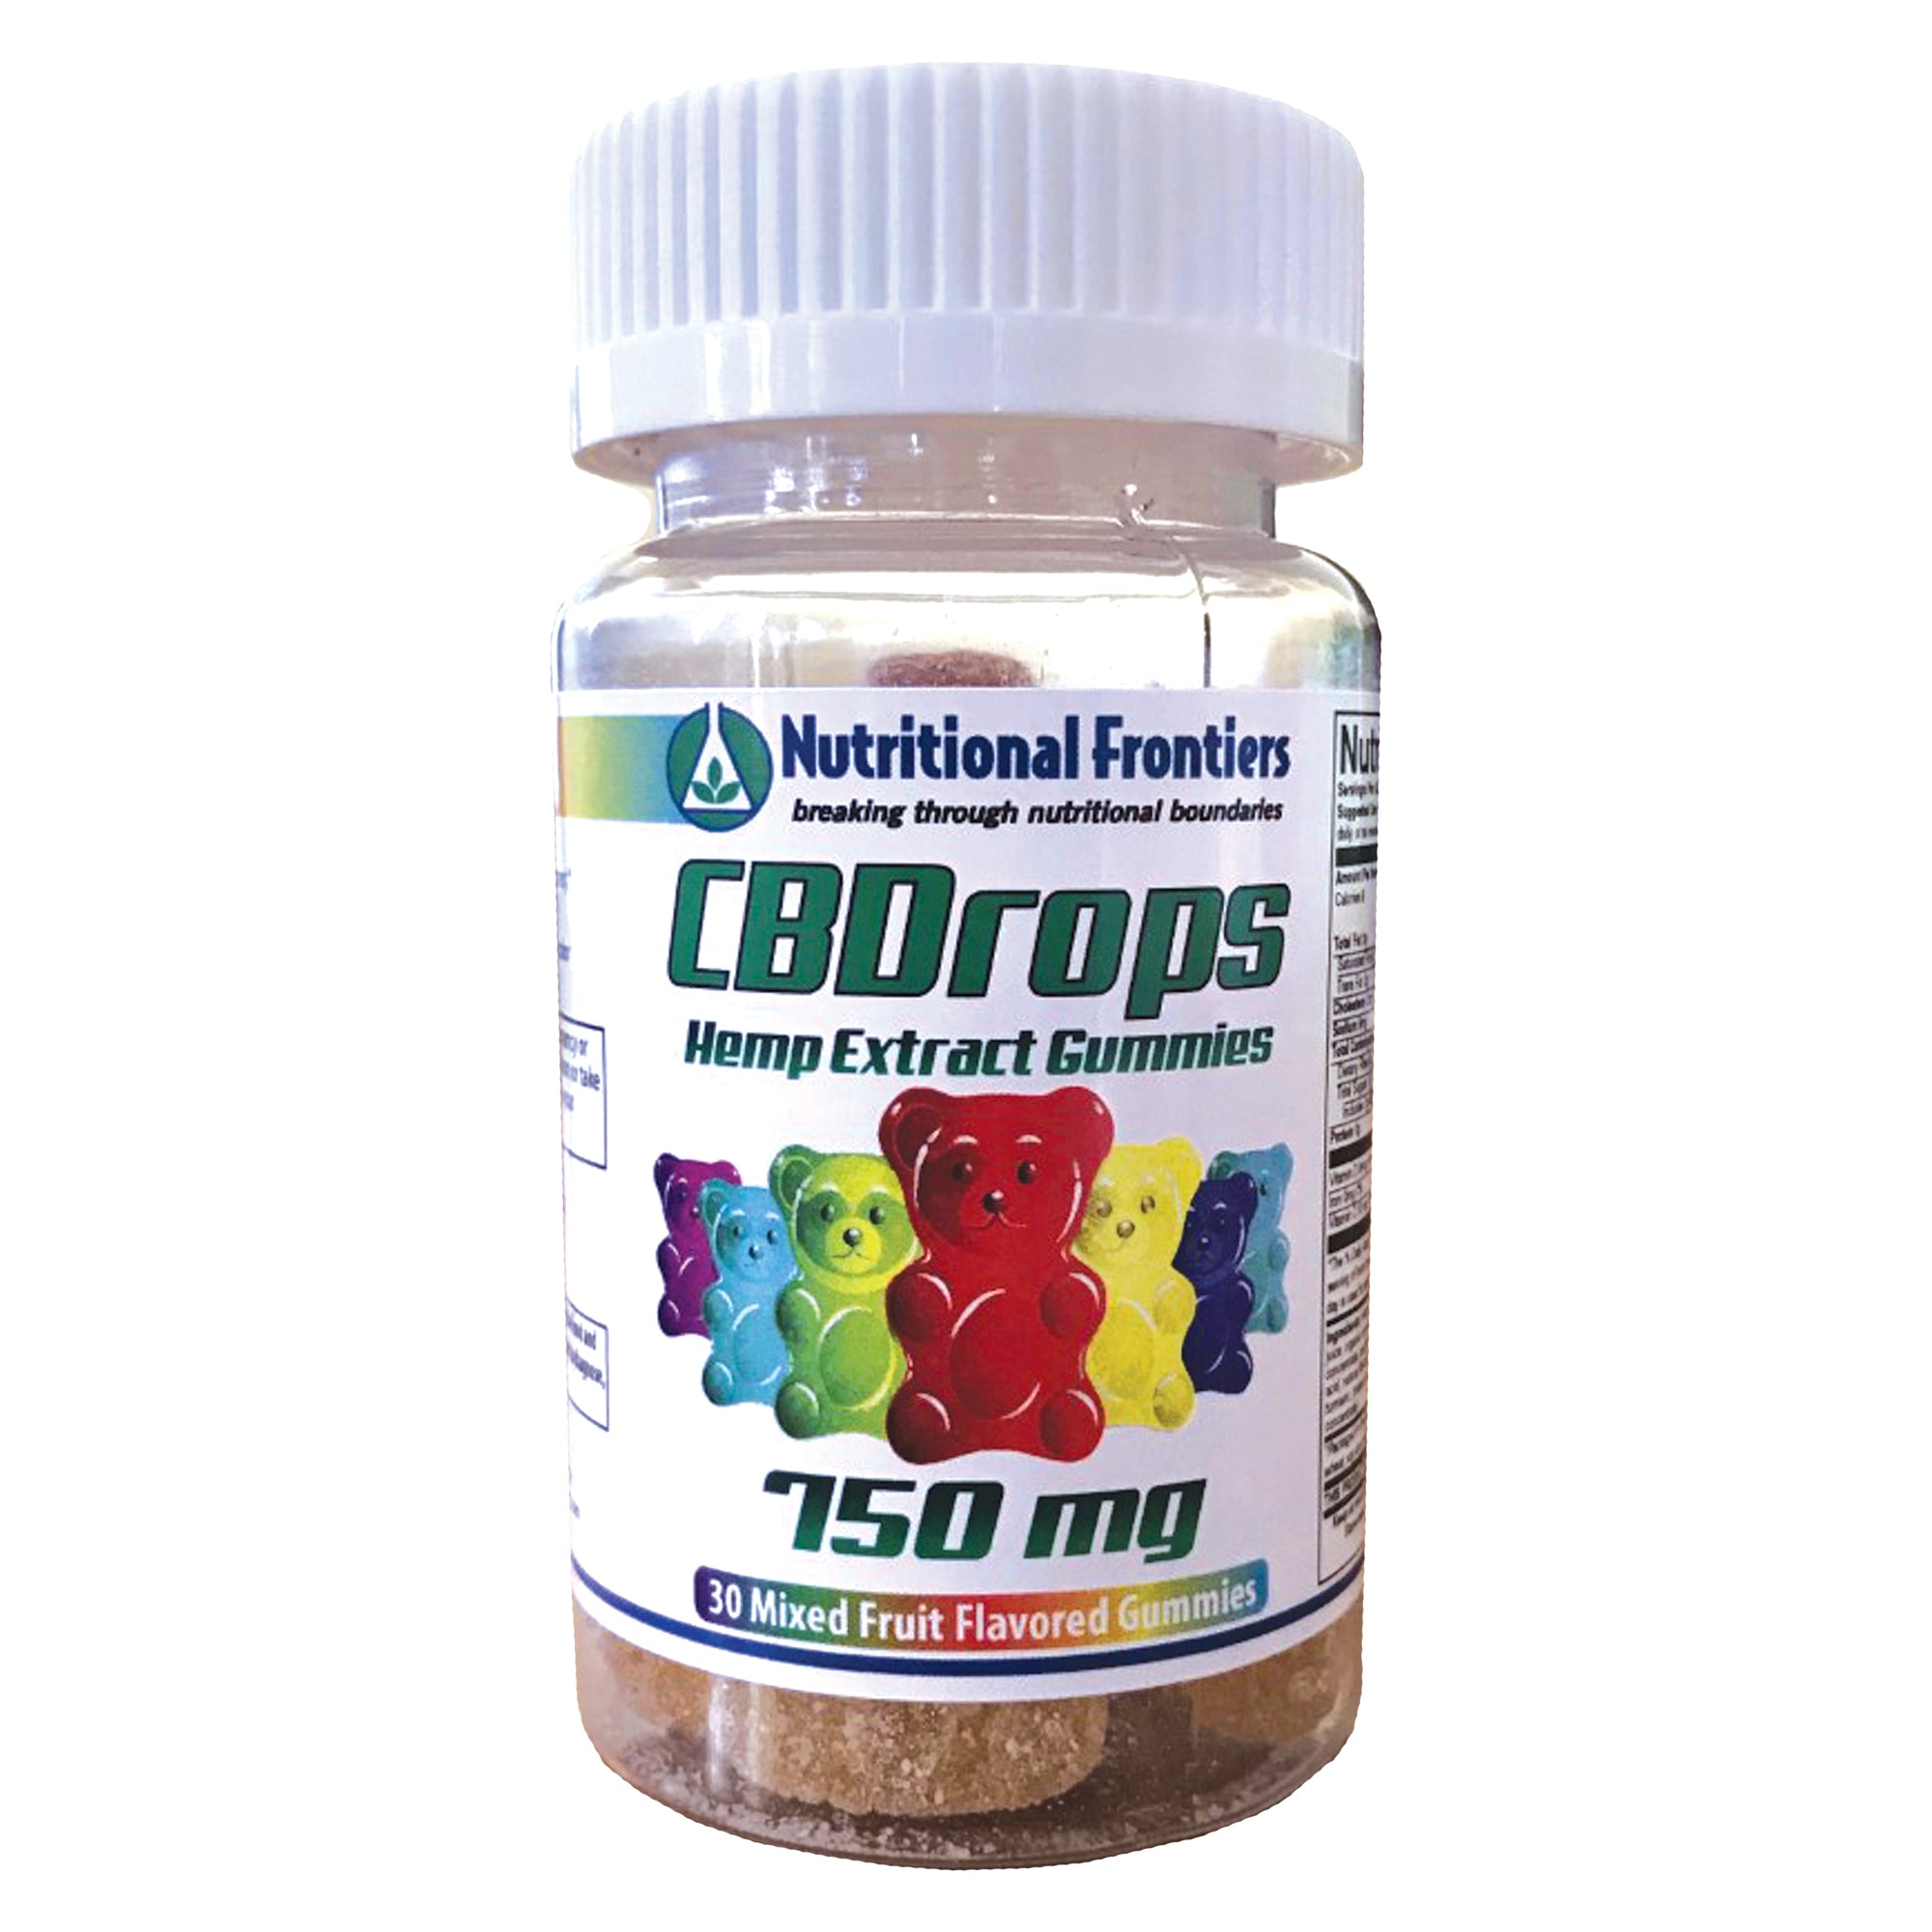 CBDrops Hemp Extract Gummies